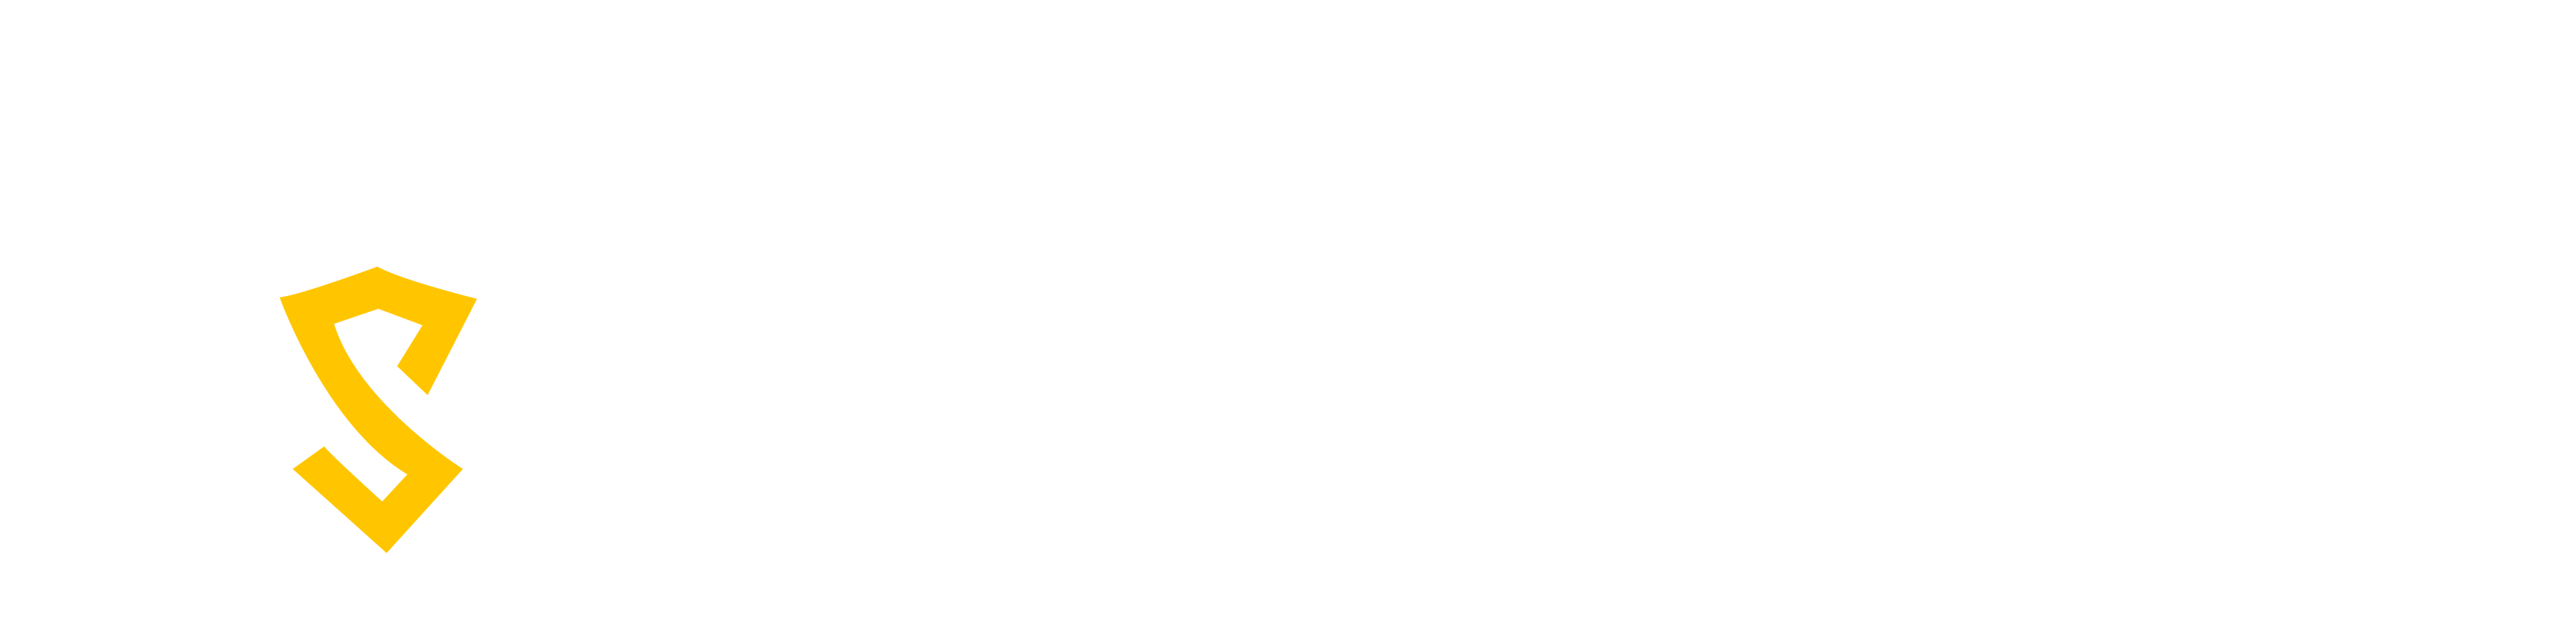 Senselearner logo